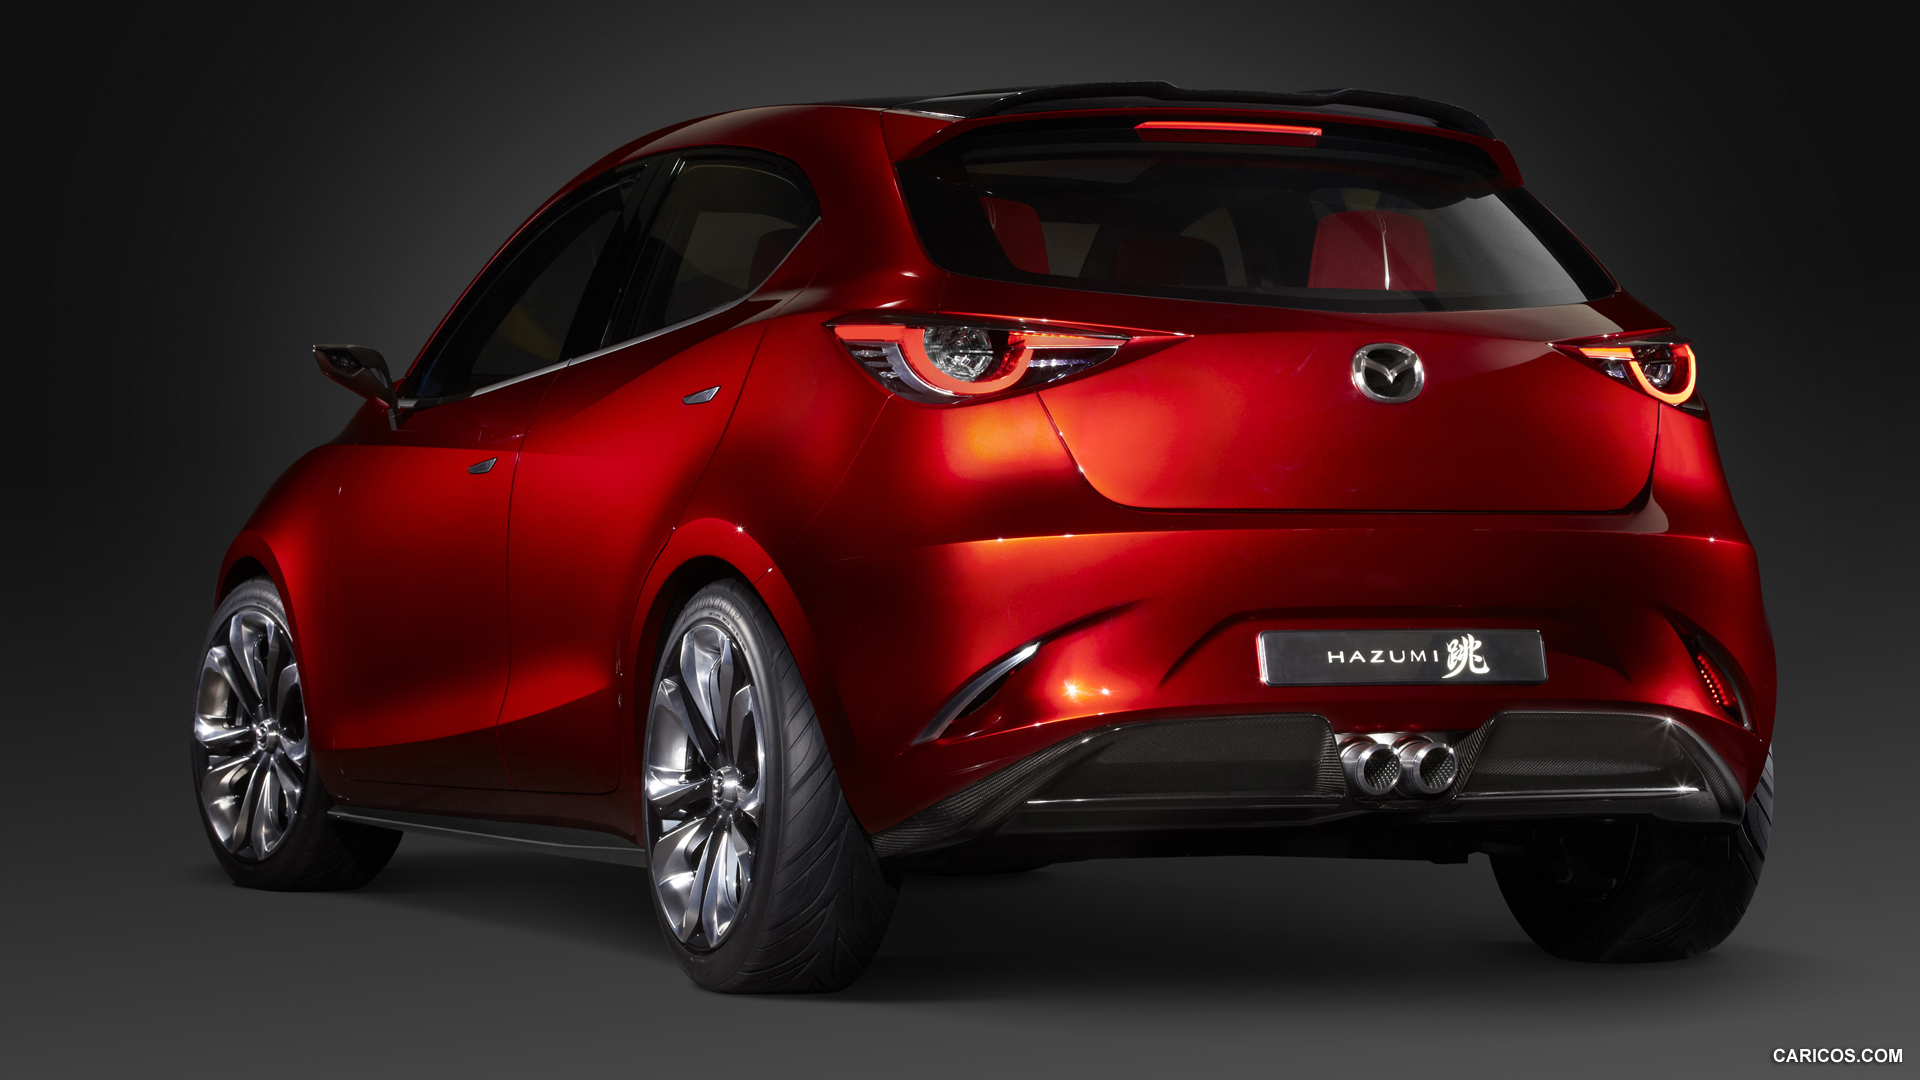 2014 Mazda Hazumi Concept  - Rear, #13 of 70